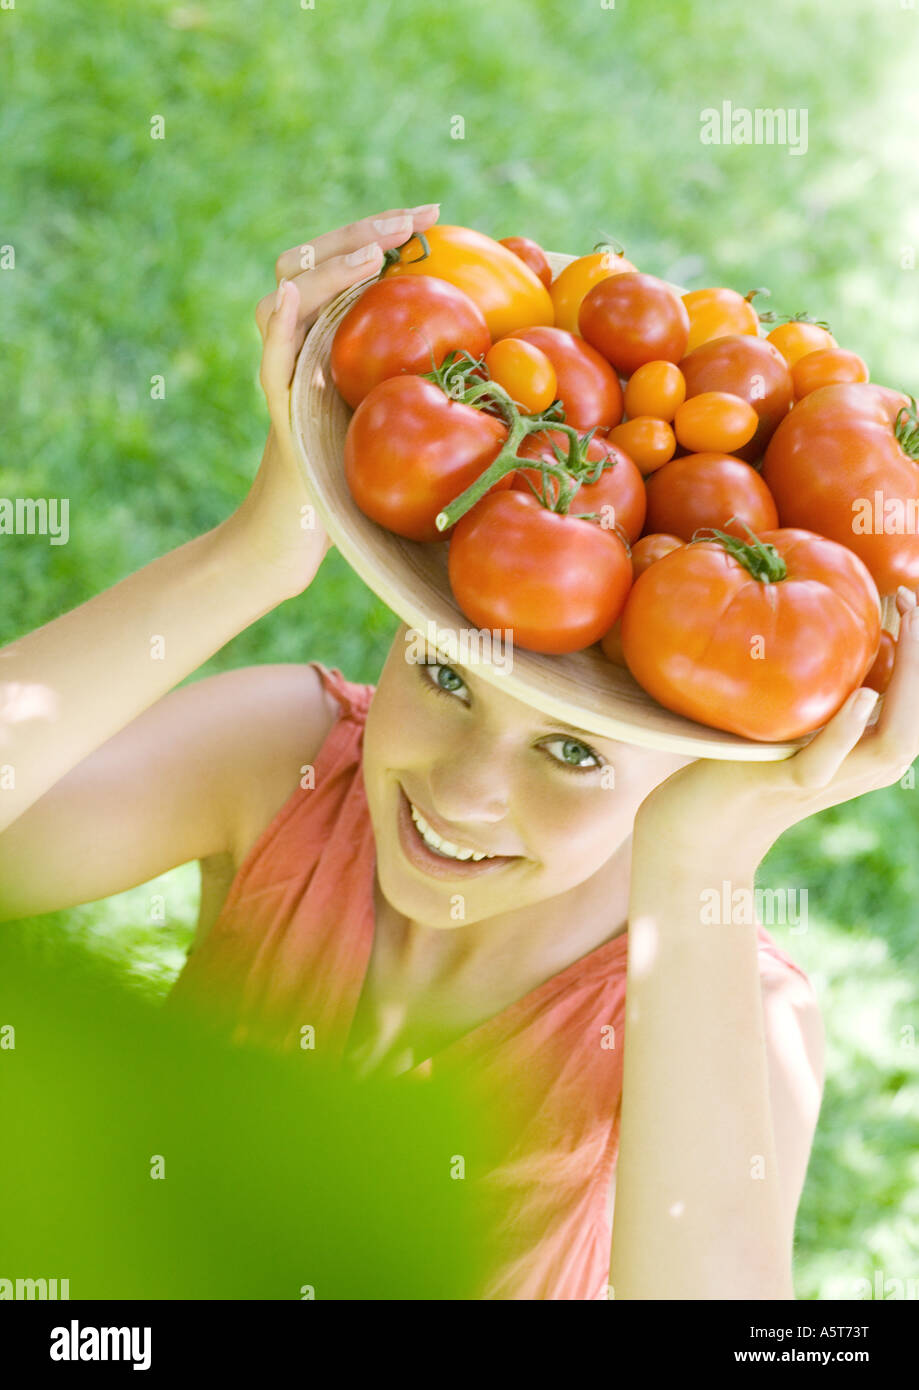 Frau Holding Schüssel voller Tomaten oben auf Kopf Stockfoto